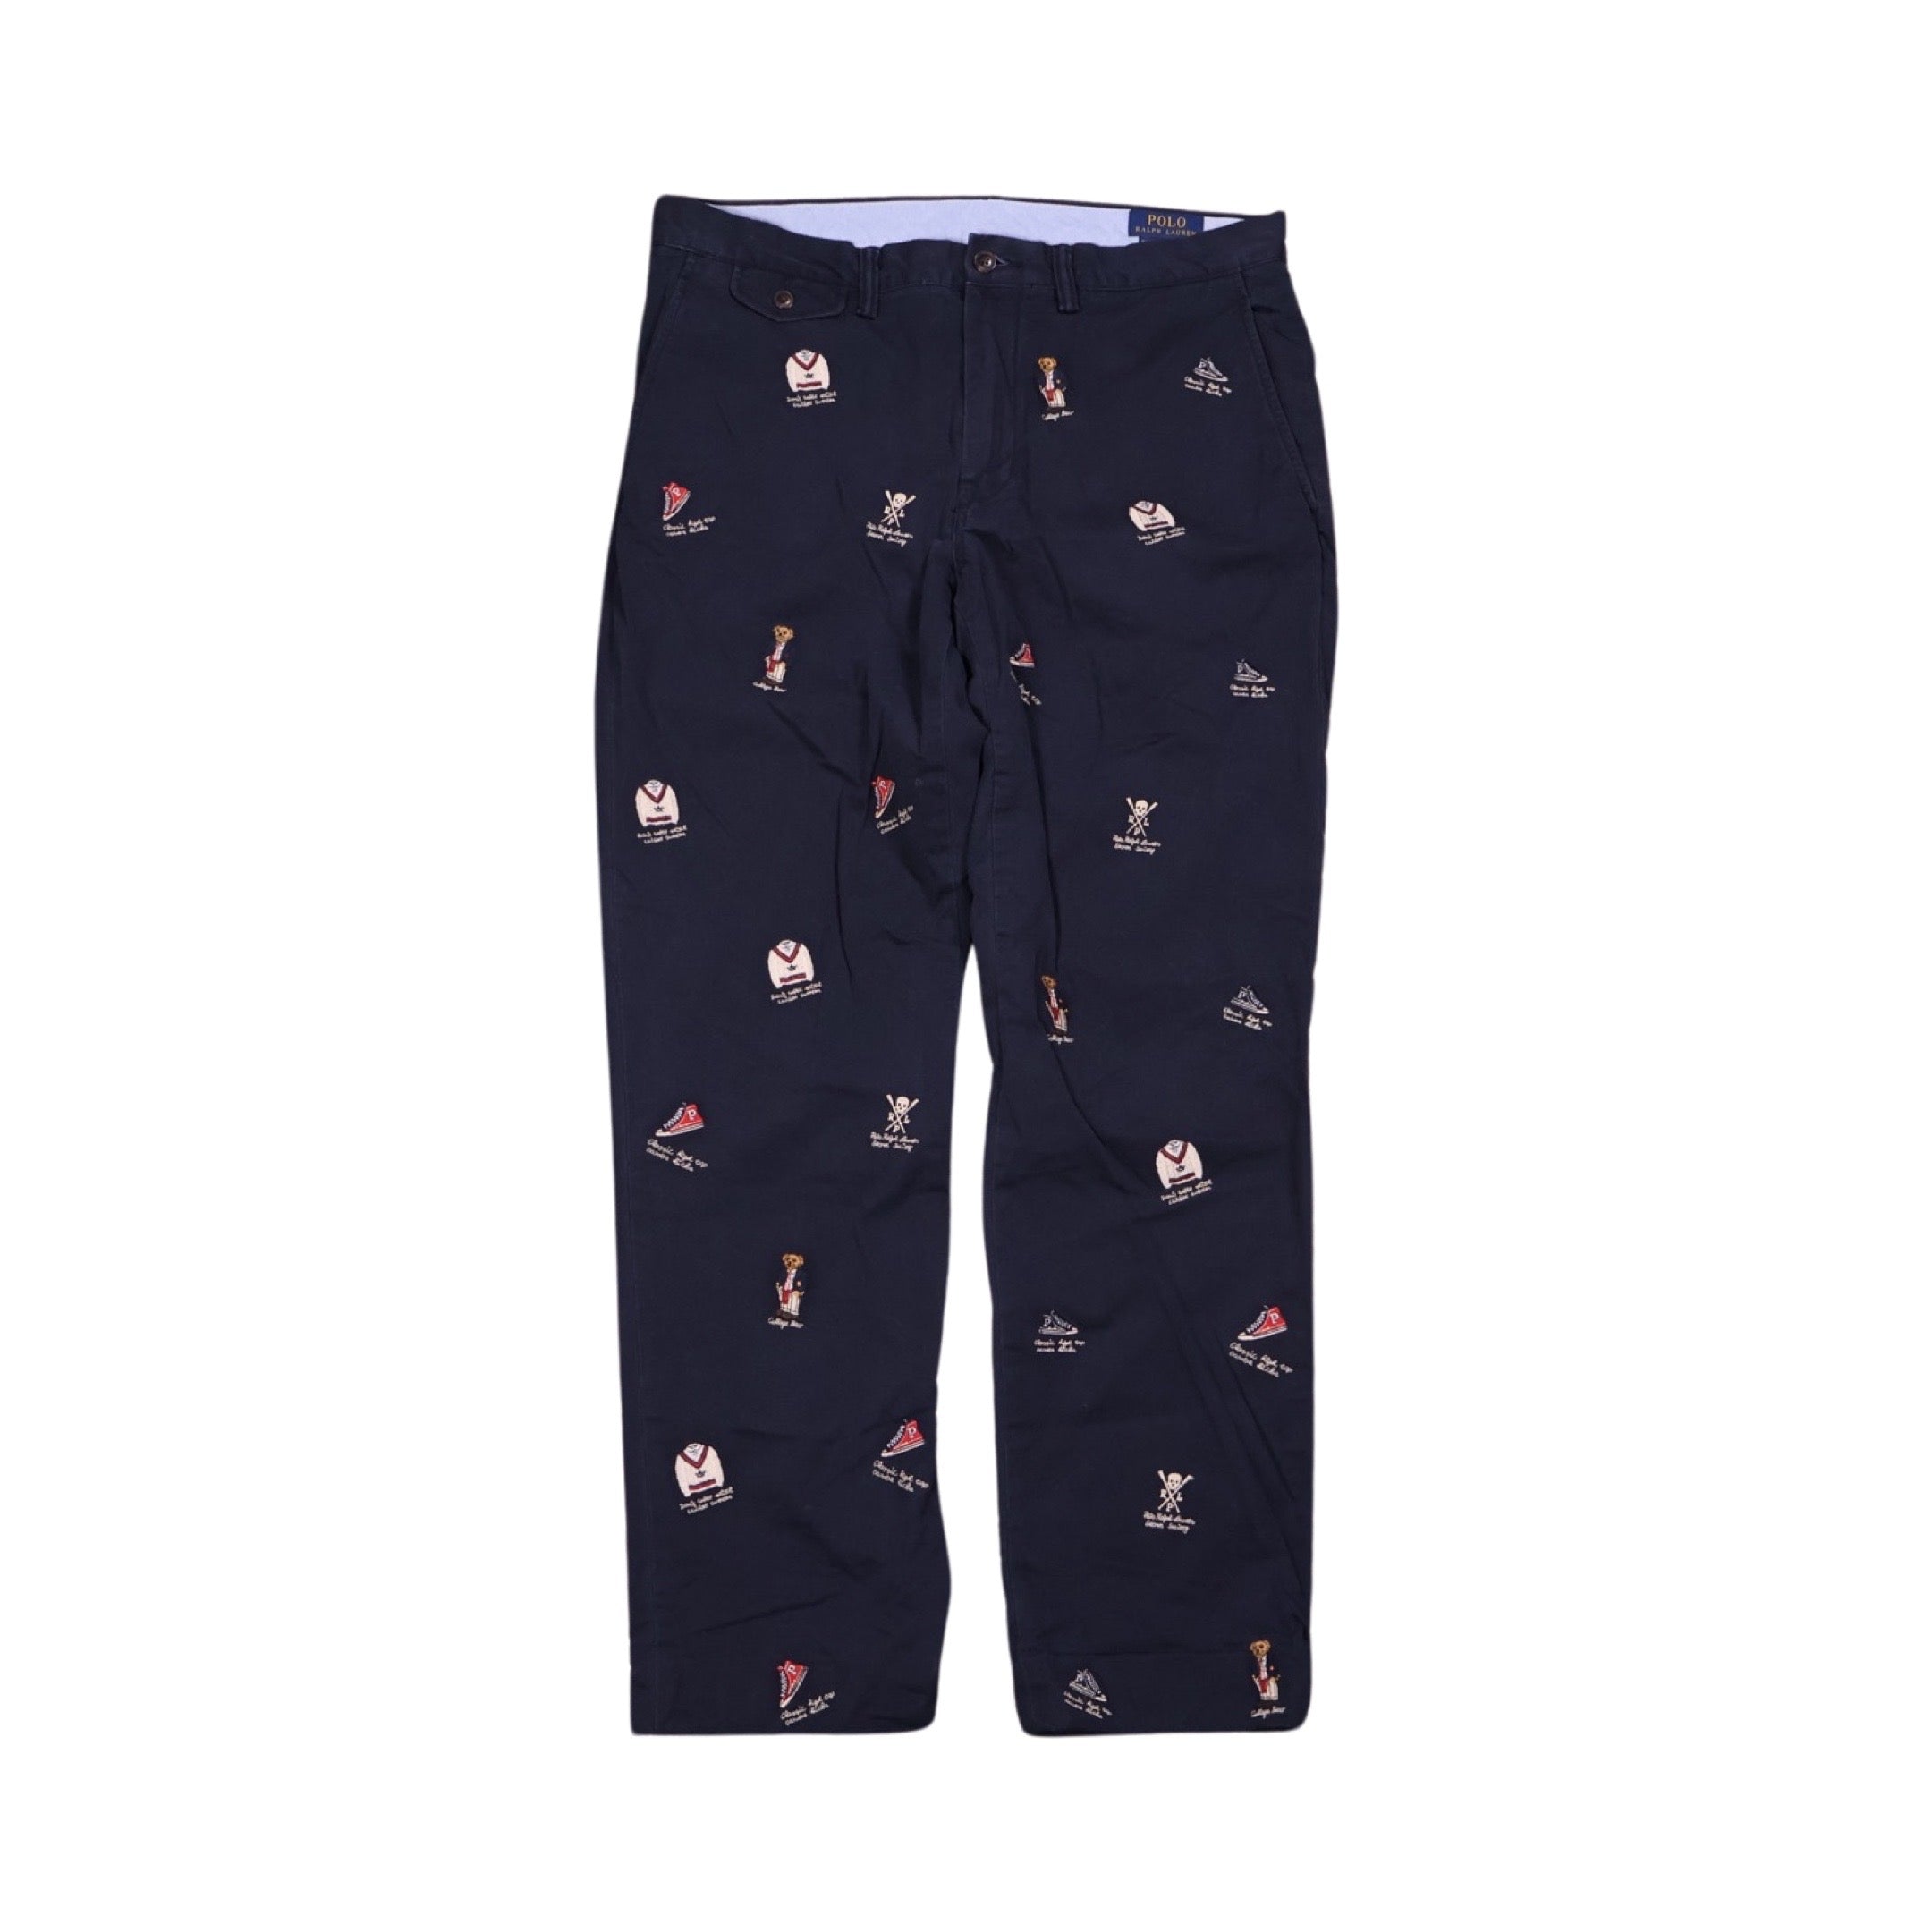 Ralph Lauren Embroidered Chino Pants (33”)